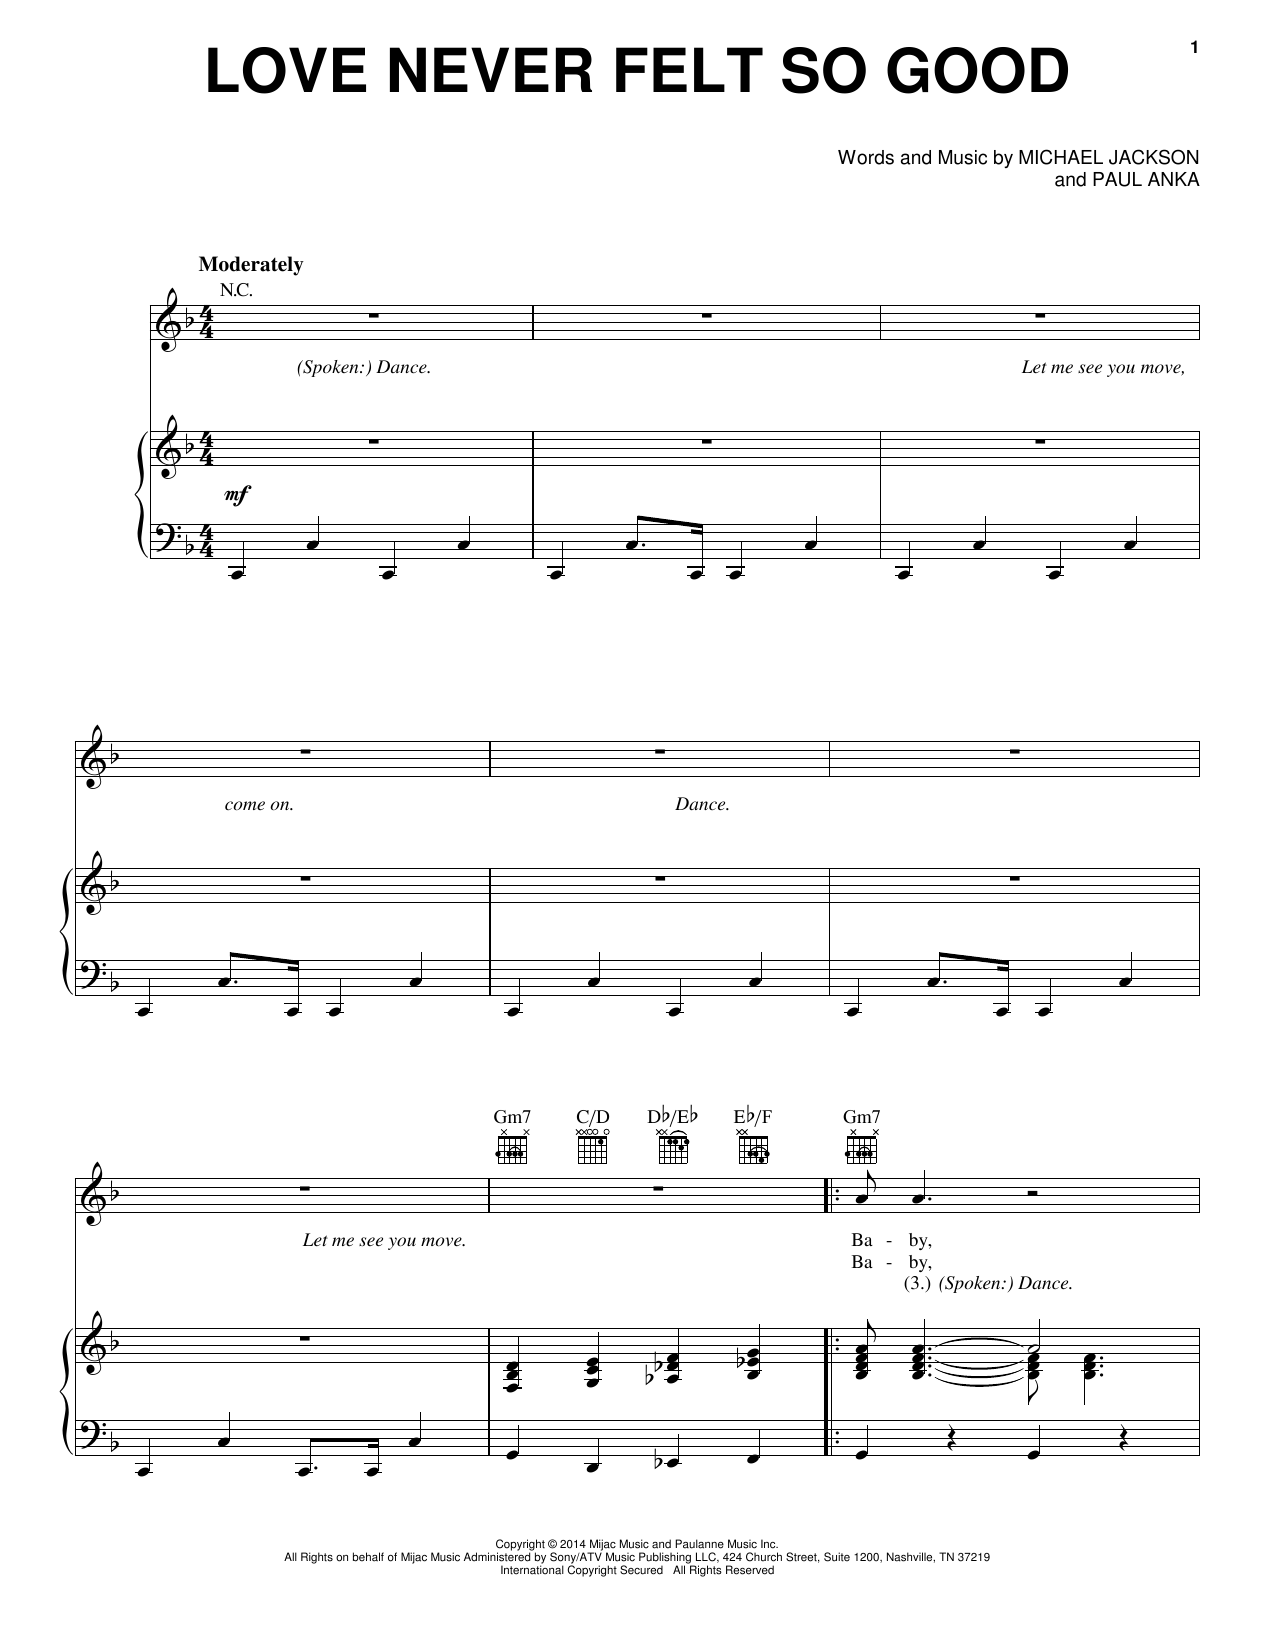 Michael Jackson & Justin Timberlake Love Never Felt So Good Sheet Music Notes & Chords for Ukulele - Download or Print PDF